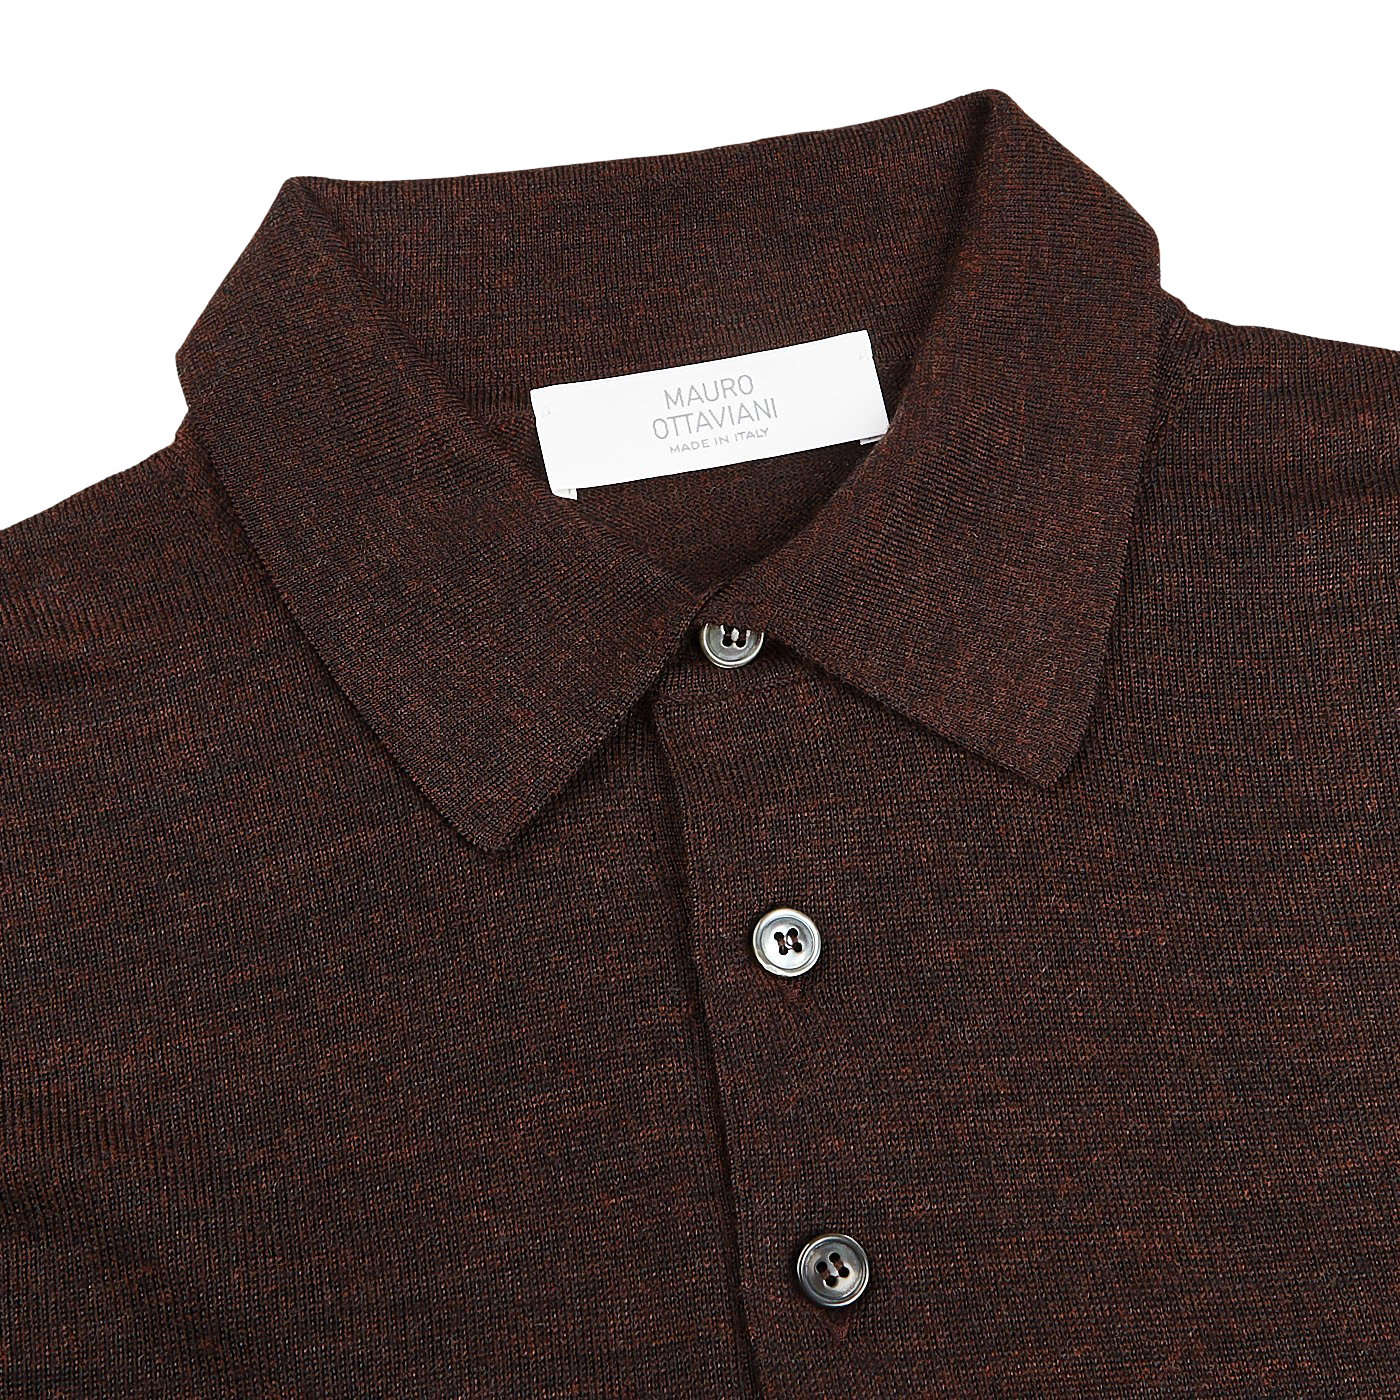 Mauro Ottaviani Brown Melange 16 Gauge Merino Wool Polo Shirt Collar